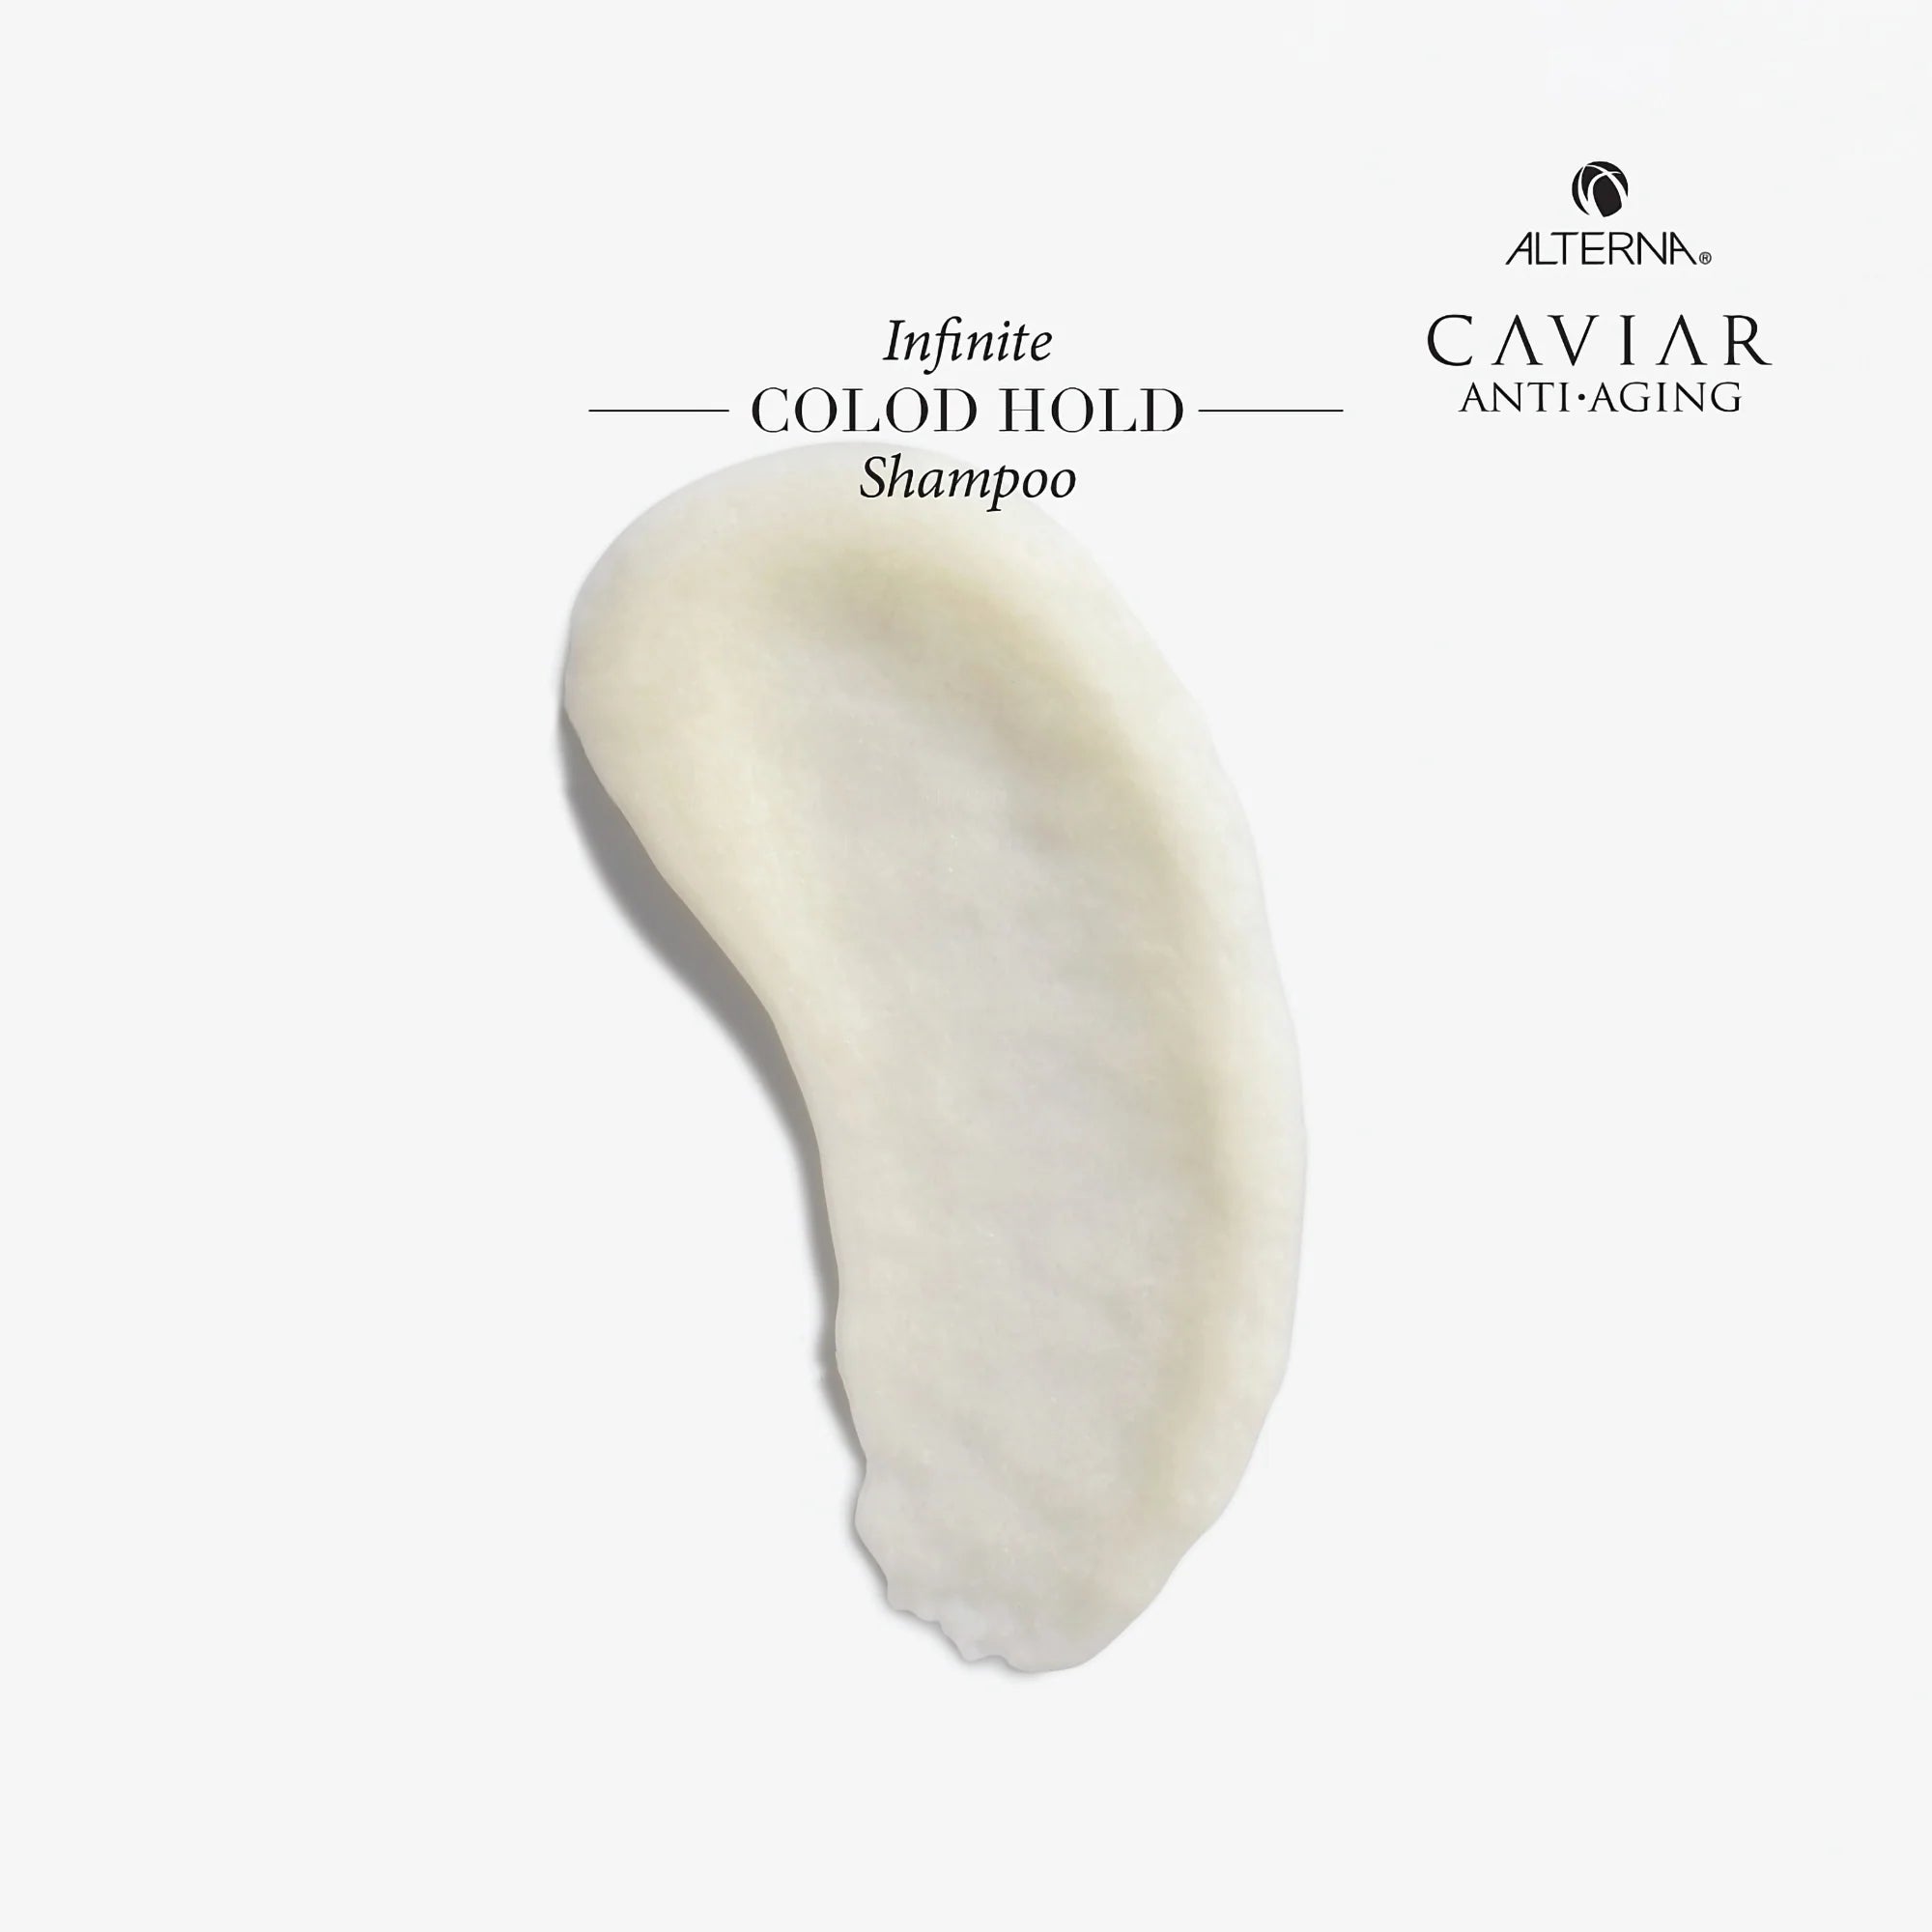 Alterna Caviar Anti-Aging Infinite Color Hold Shampoo and Conditioner Liter Bundle ($162 Value) / 33OZ